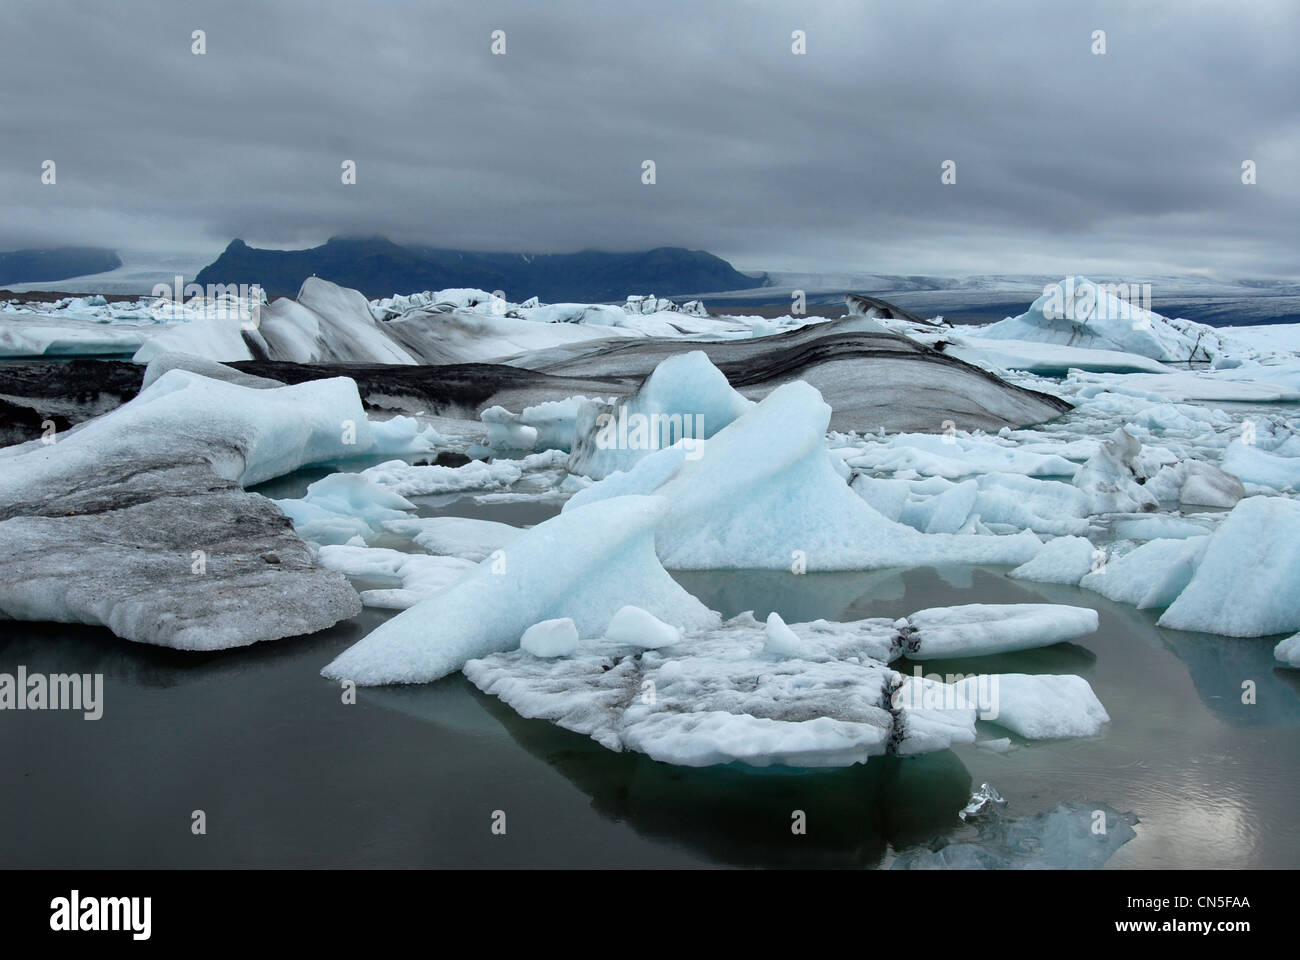 Iceland, Austurland Region, icebergs floating in the Jokulsarlon Glacial Lake and Glacier Breidamerkurjokull in the background, Stock Photo